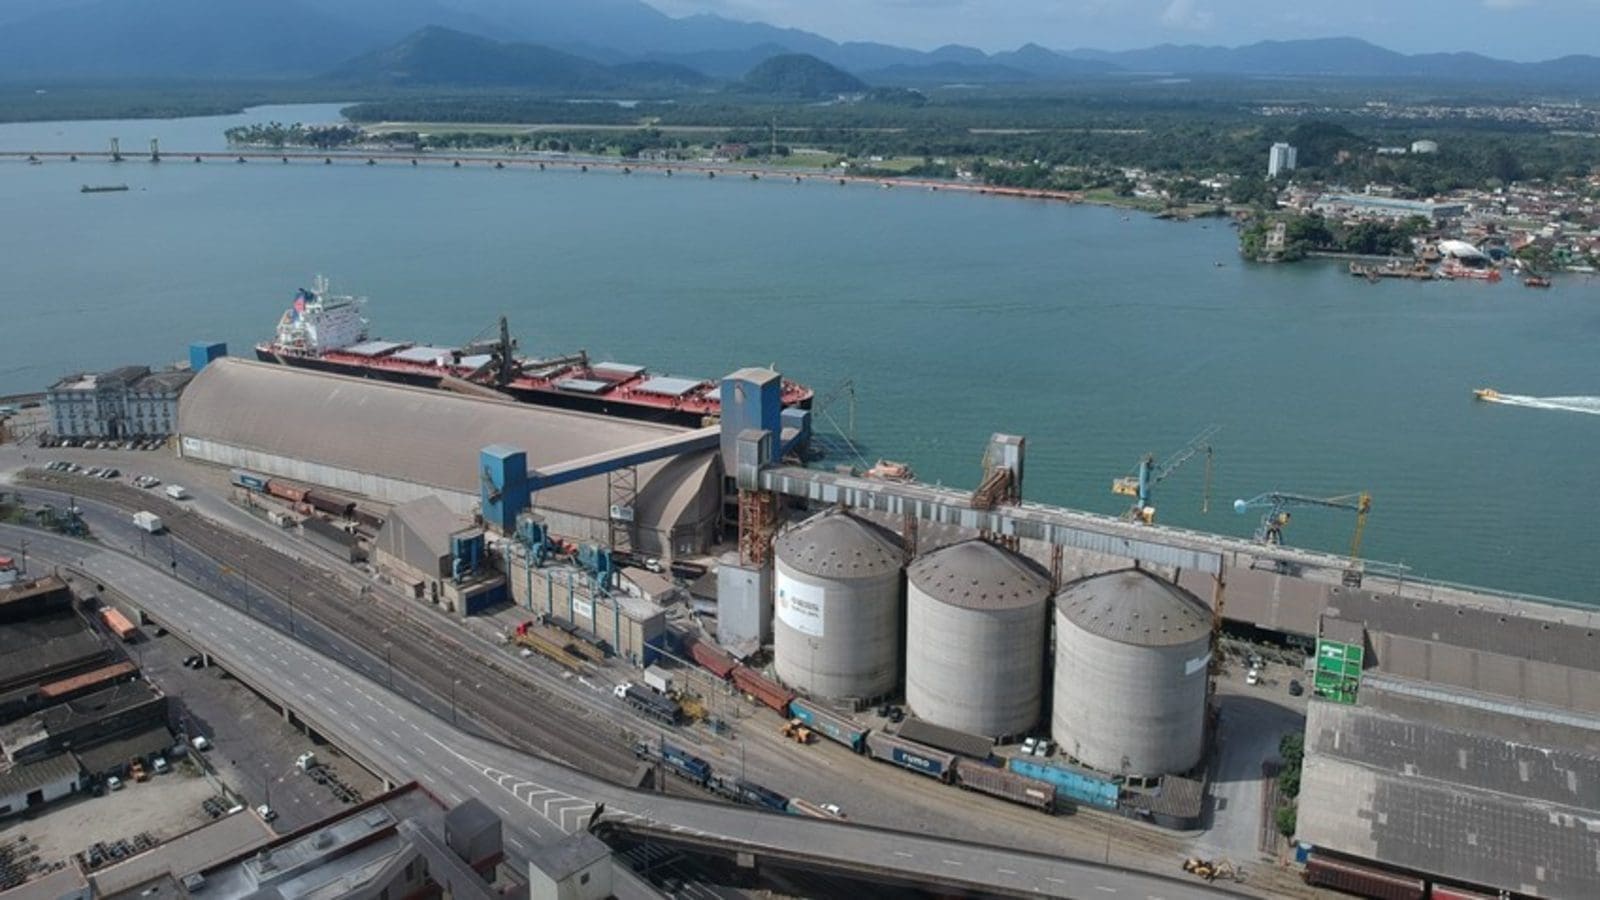 COFCO adds new bulk terminal in Brazil to strengthen grain handling capabilities 